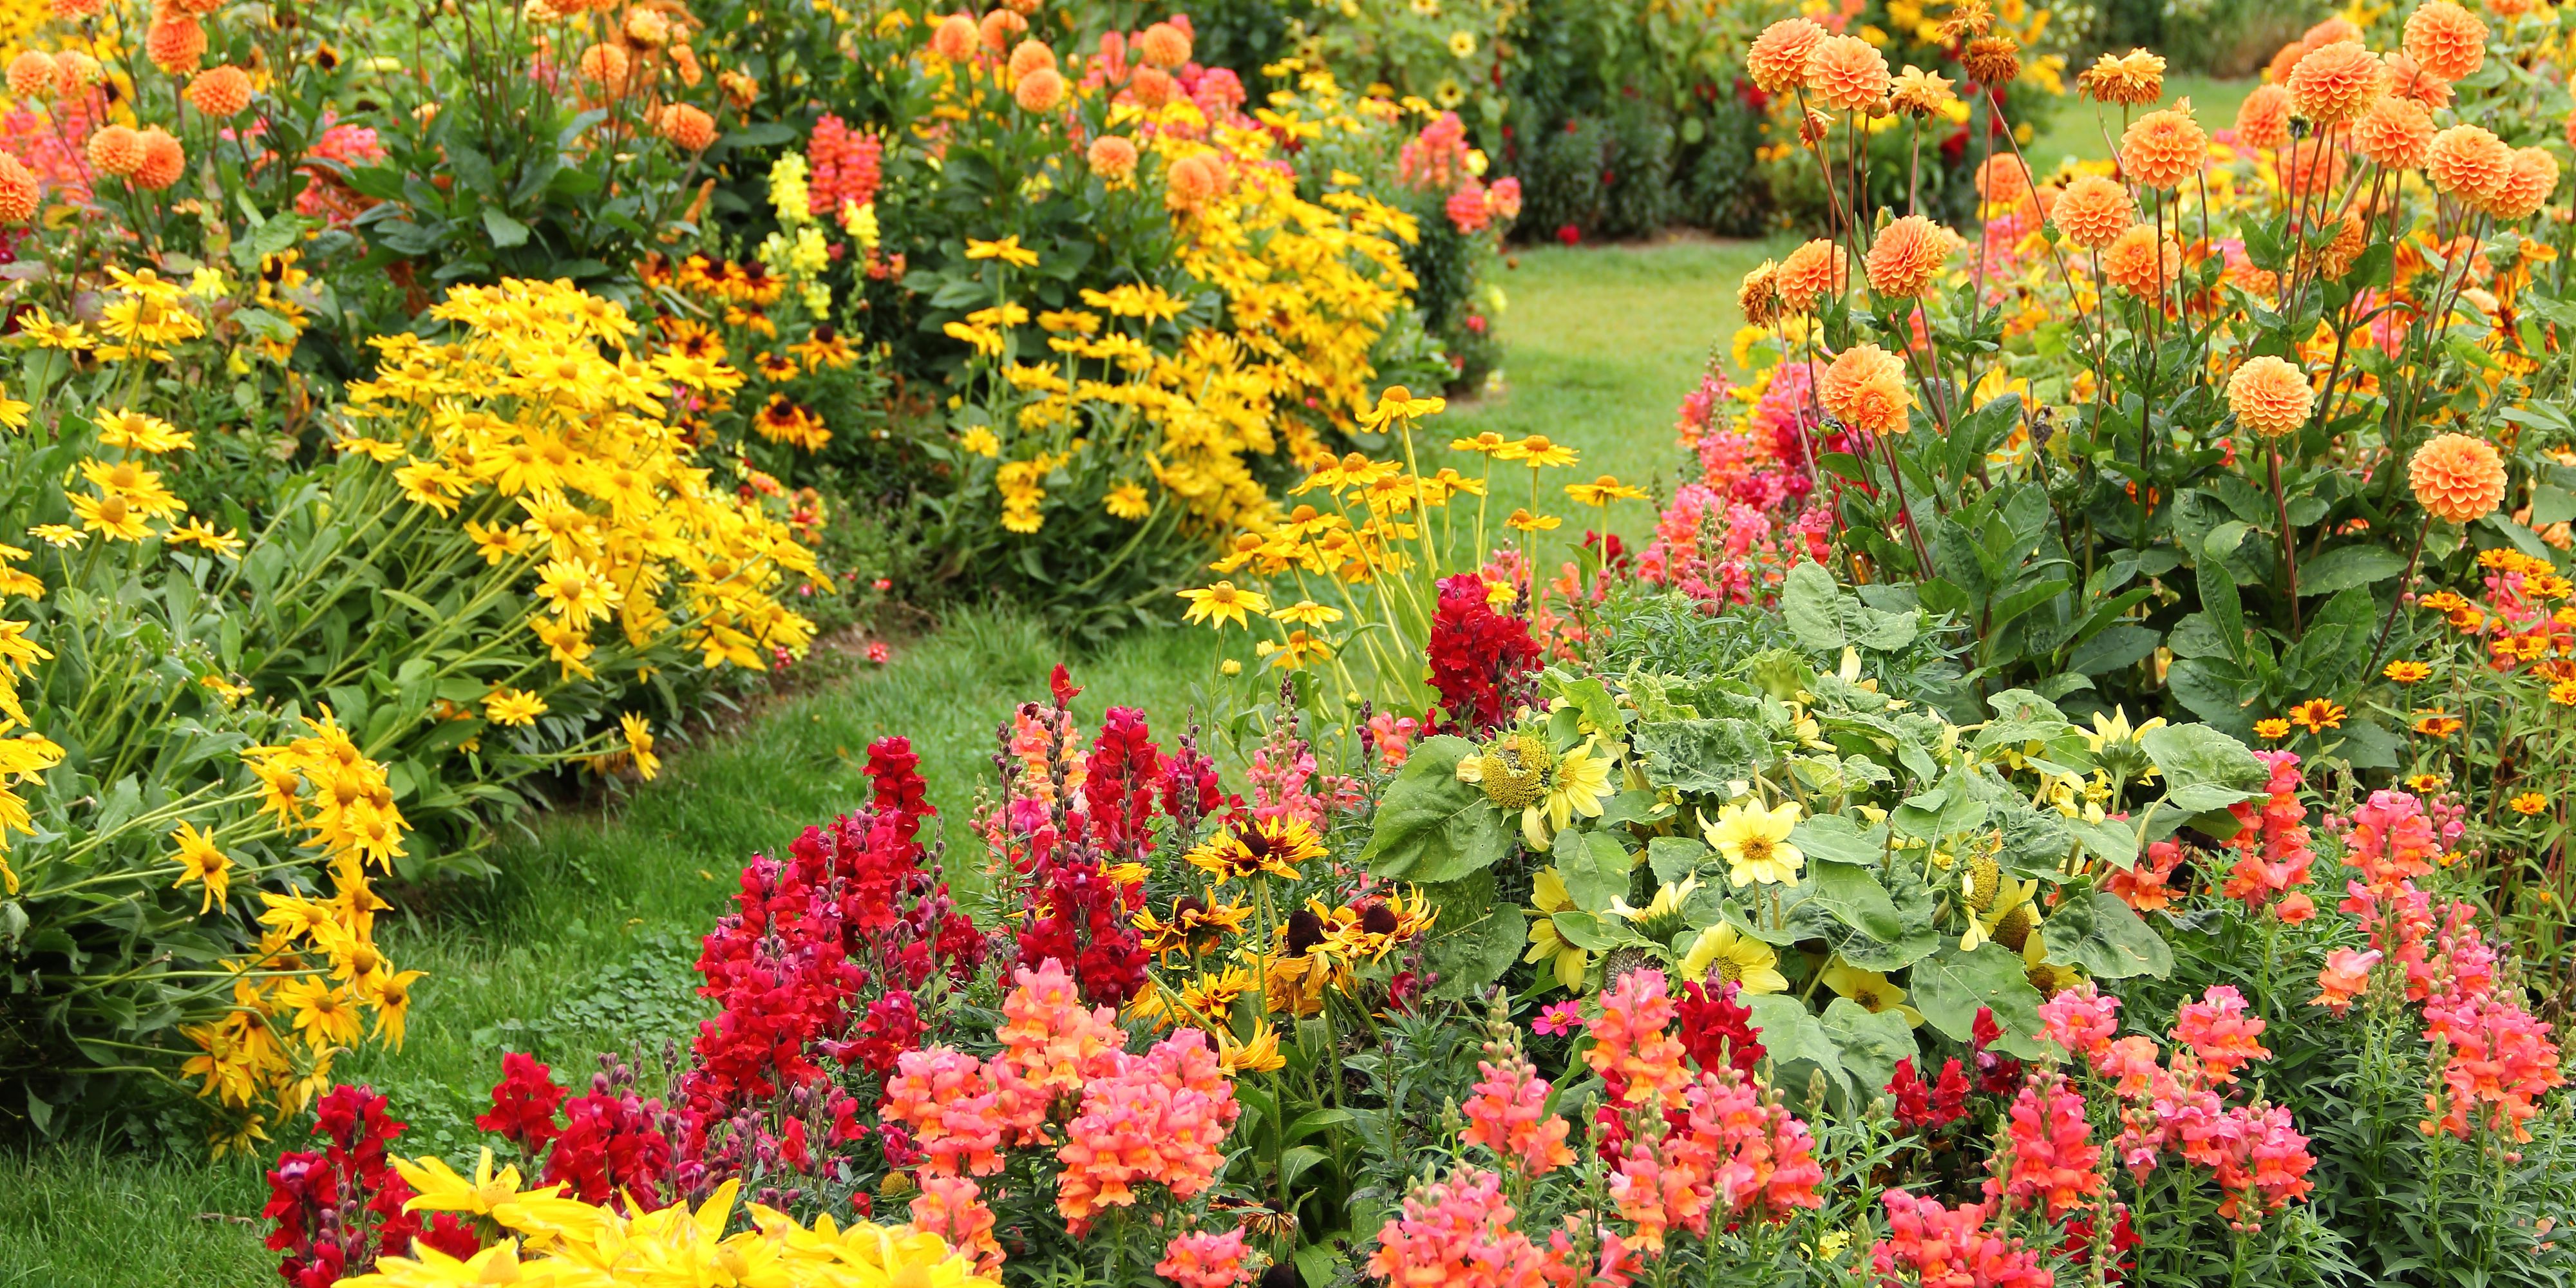 15 Best Fall Flowers & Plants - Flowers That Bloom in Autumn